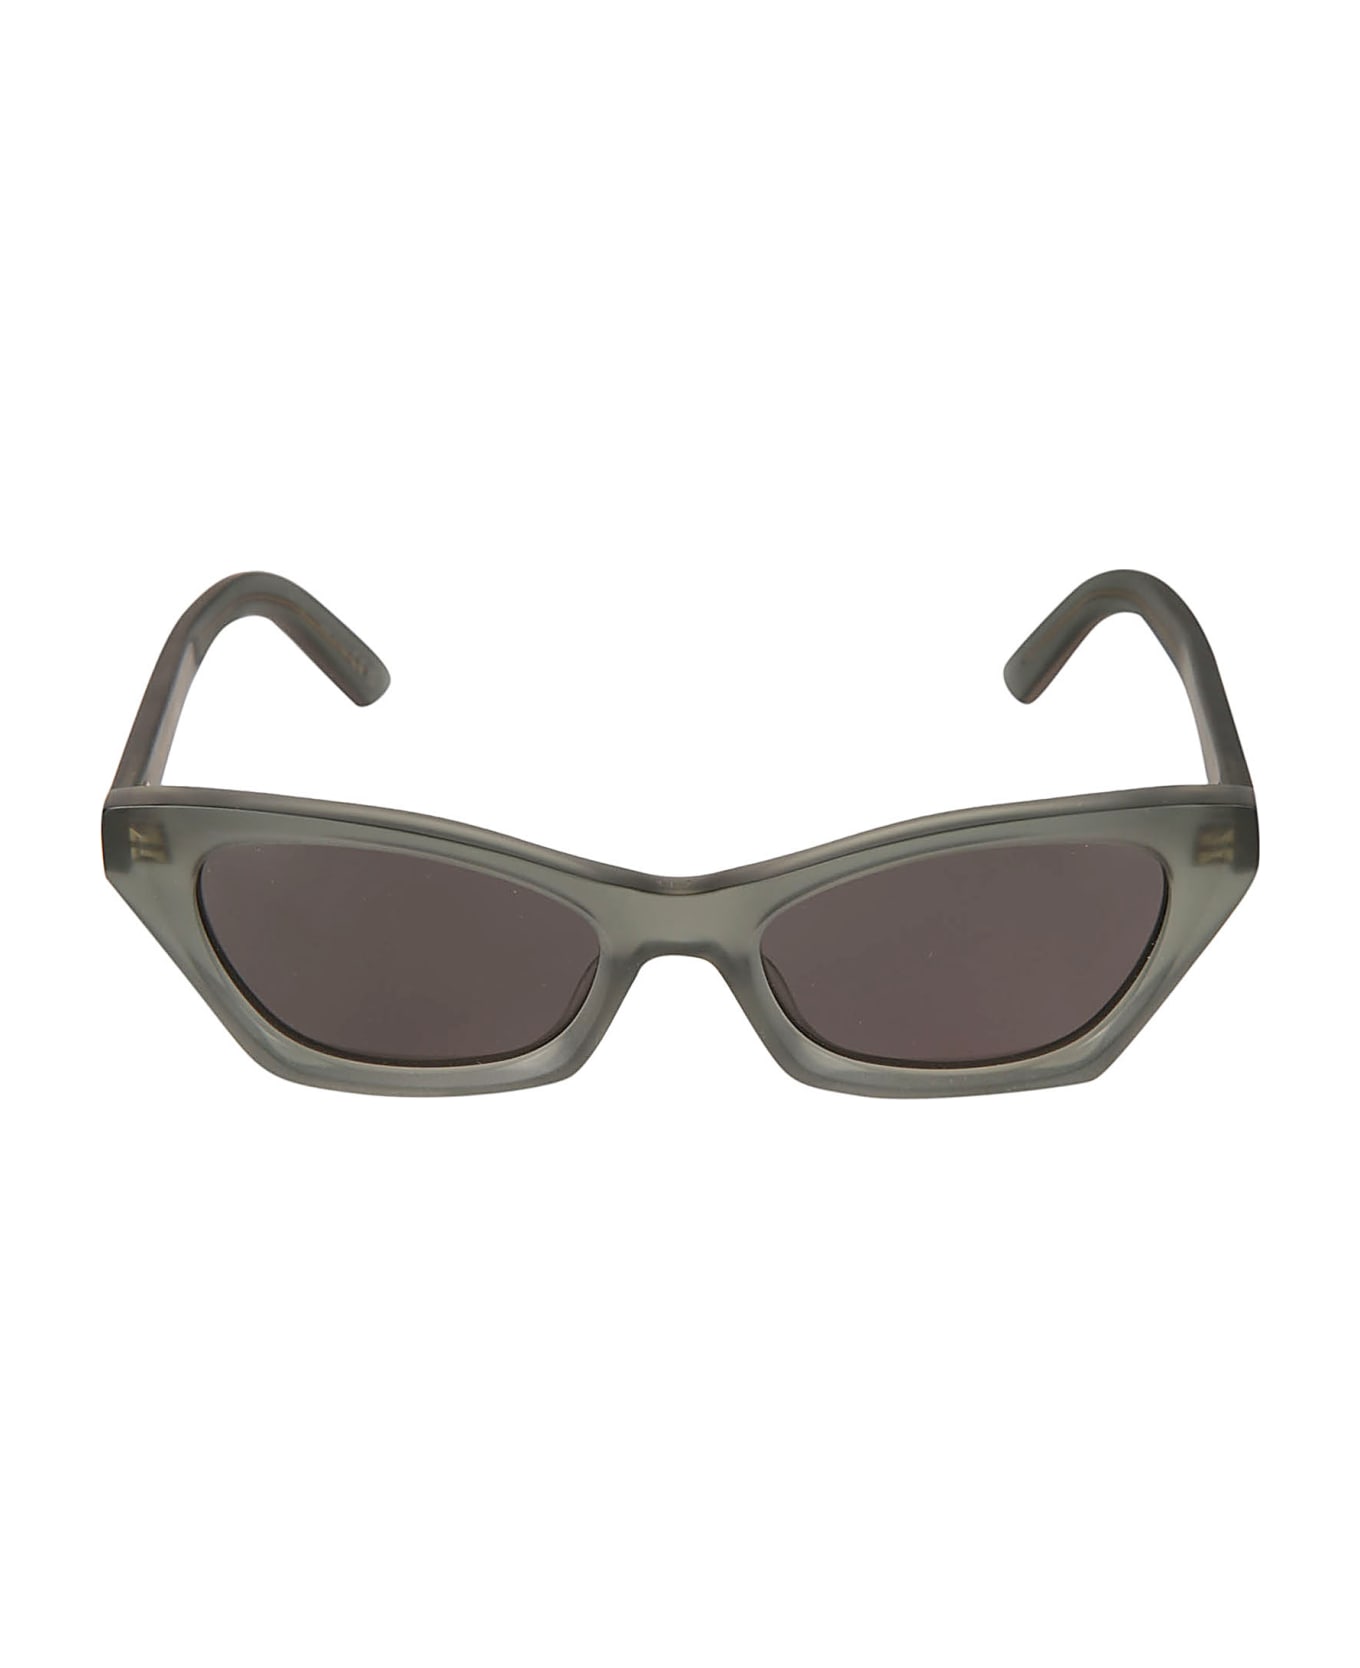 Dior Eyewear Diormidnight Sunglasses - 56a0 サングラス